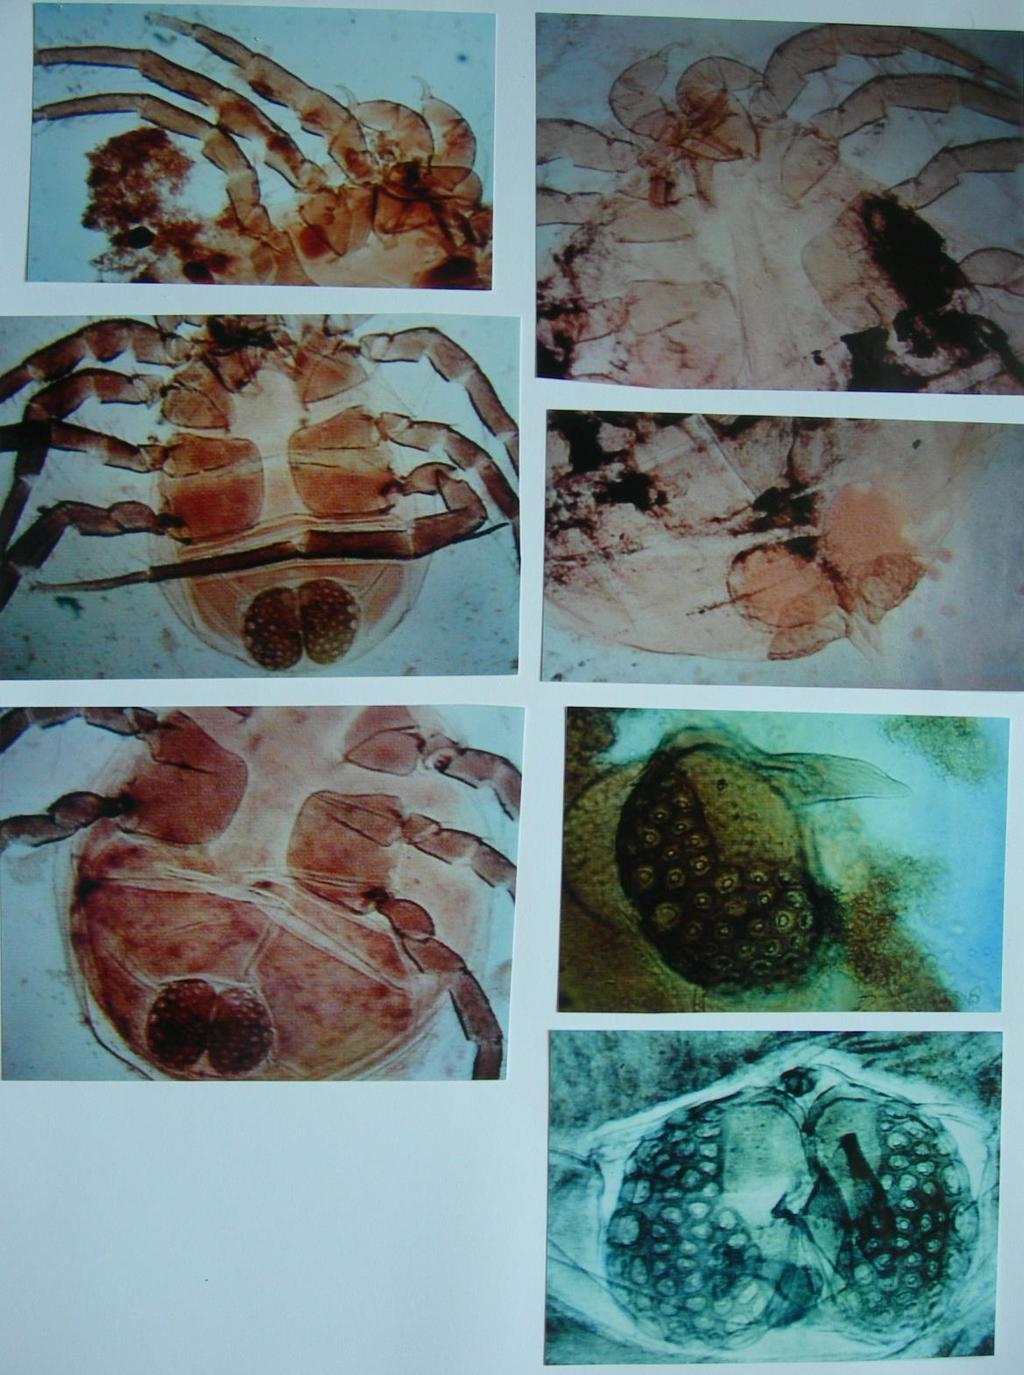 Plate 199: Top left: male anterior venter. Top right: female anterior venter. Middle left: male venter.